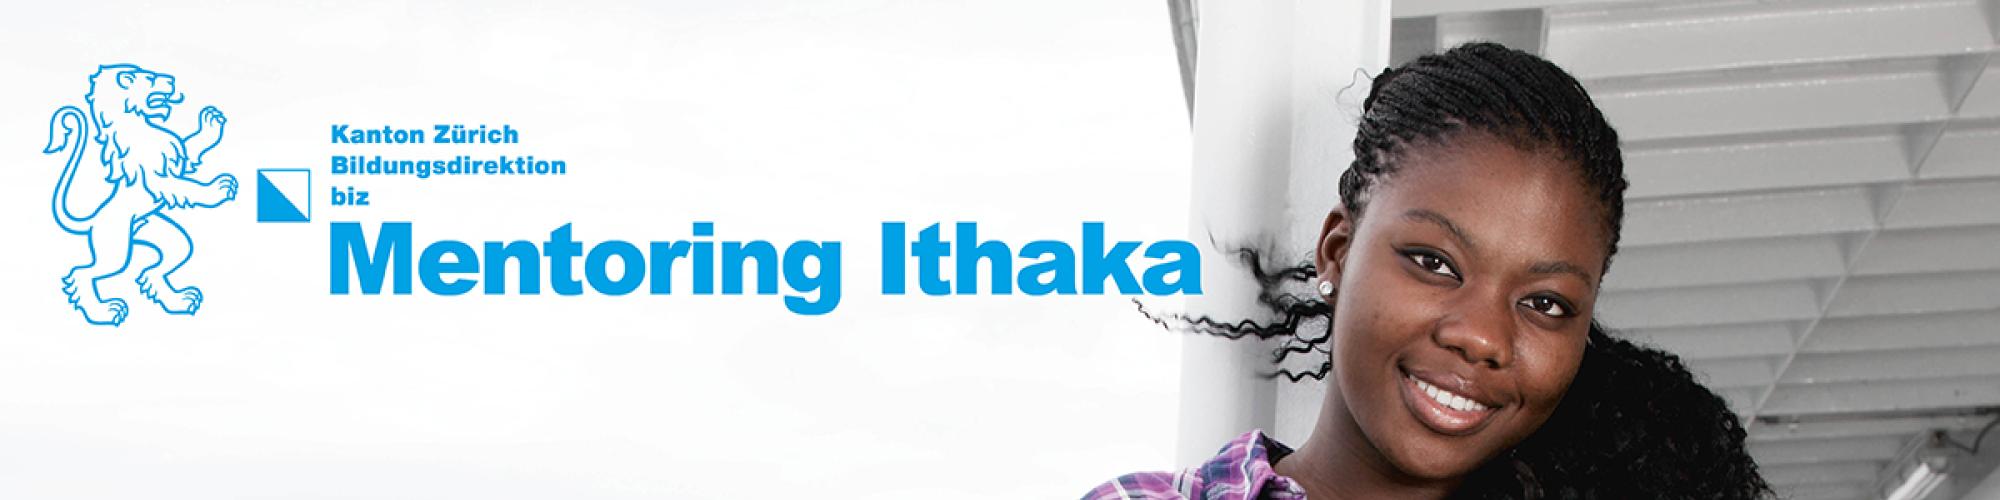  Mentoring Ithaka